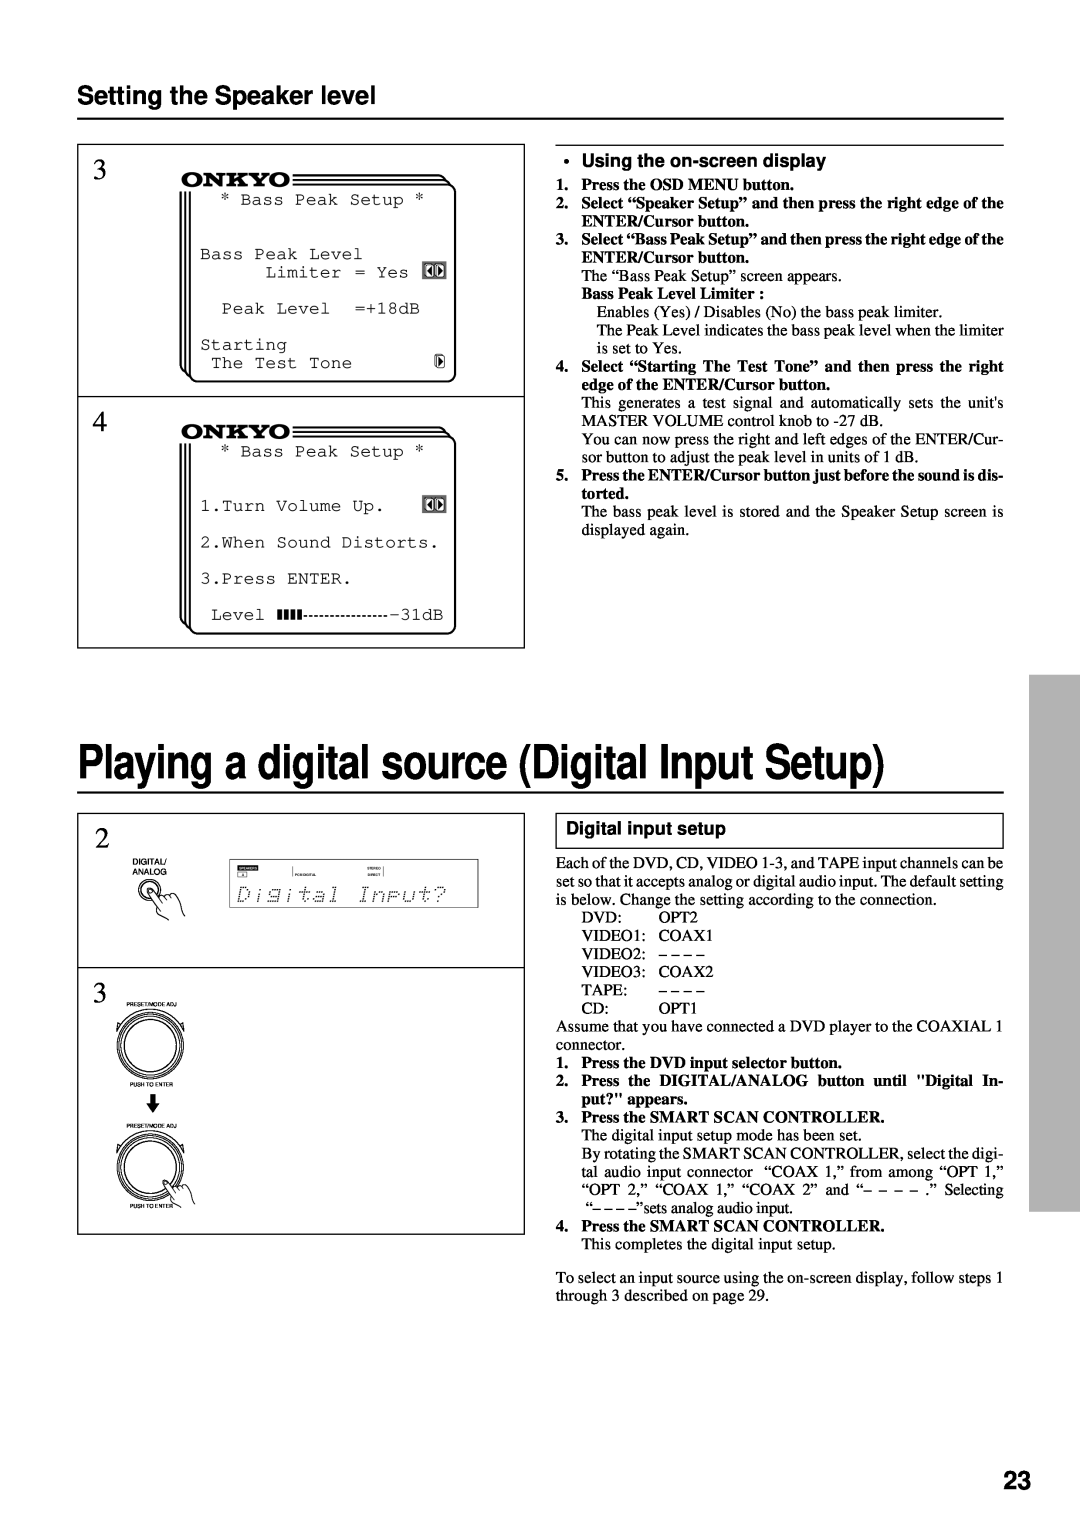 Integra DTR-7 Playing a digital source Digital Input Setup, Setting the Speaker level, Using the on-screendisplay 